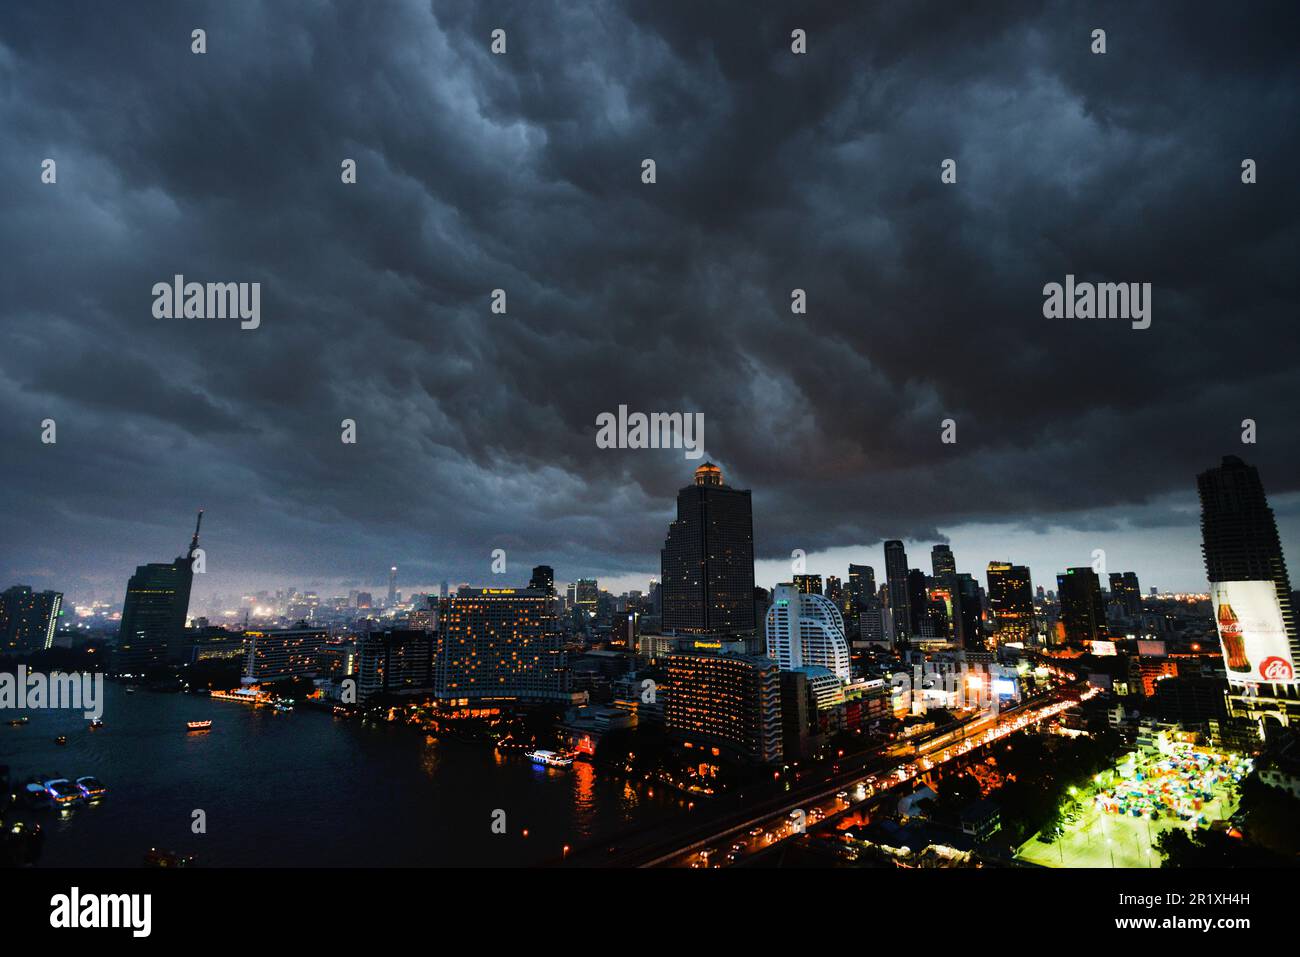 Stormy weather over Bangkok, Thailand. Stock Photo